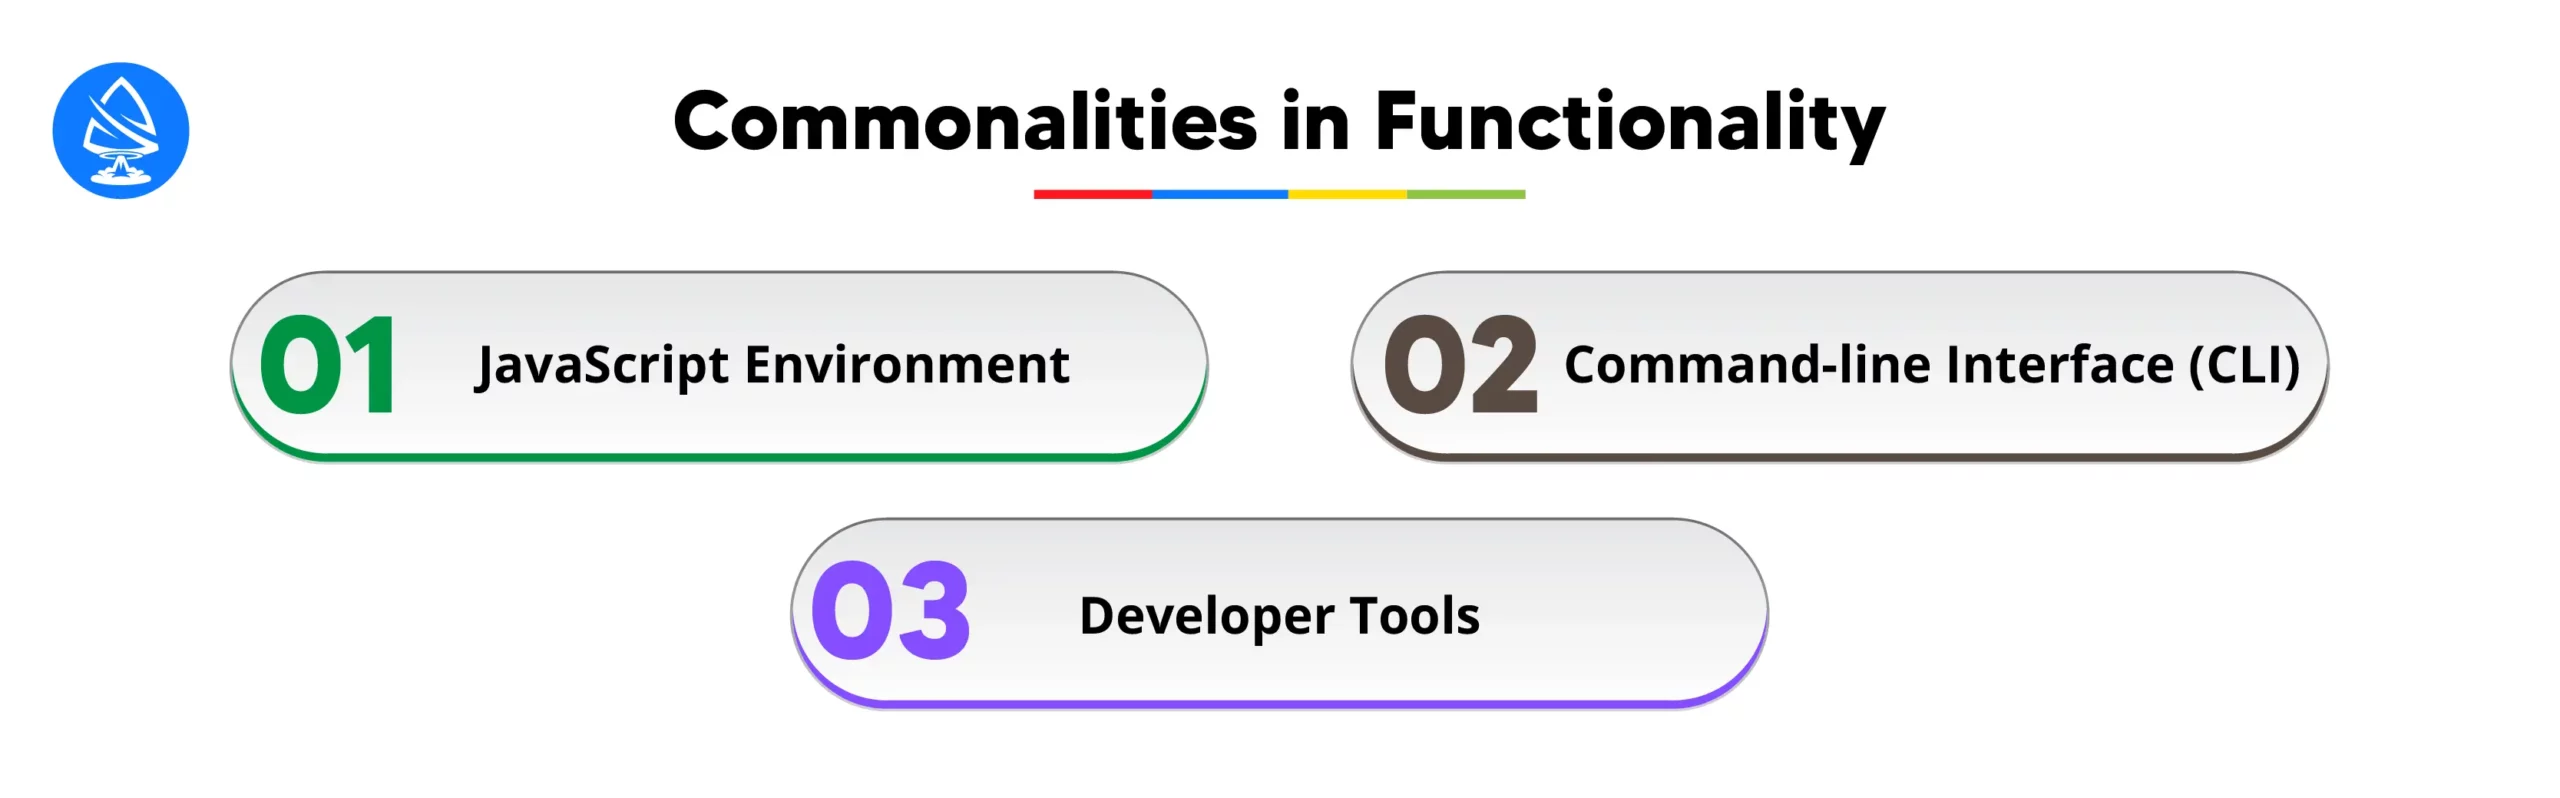 Commonalities in functionality 